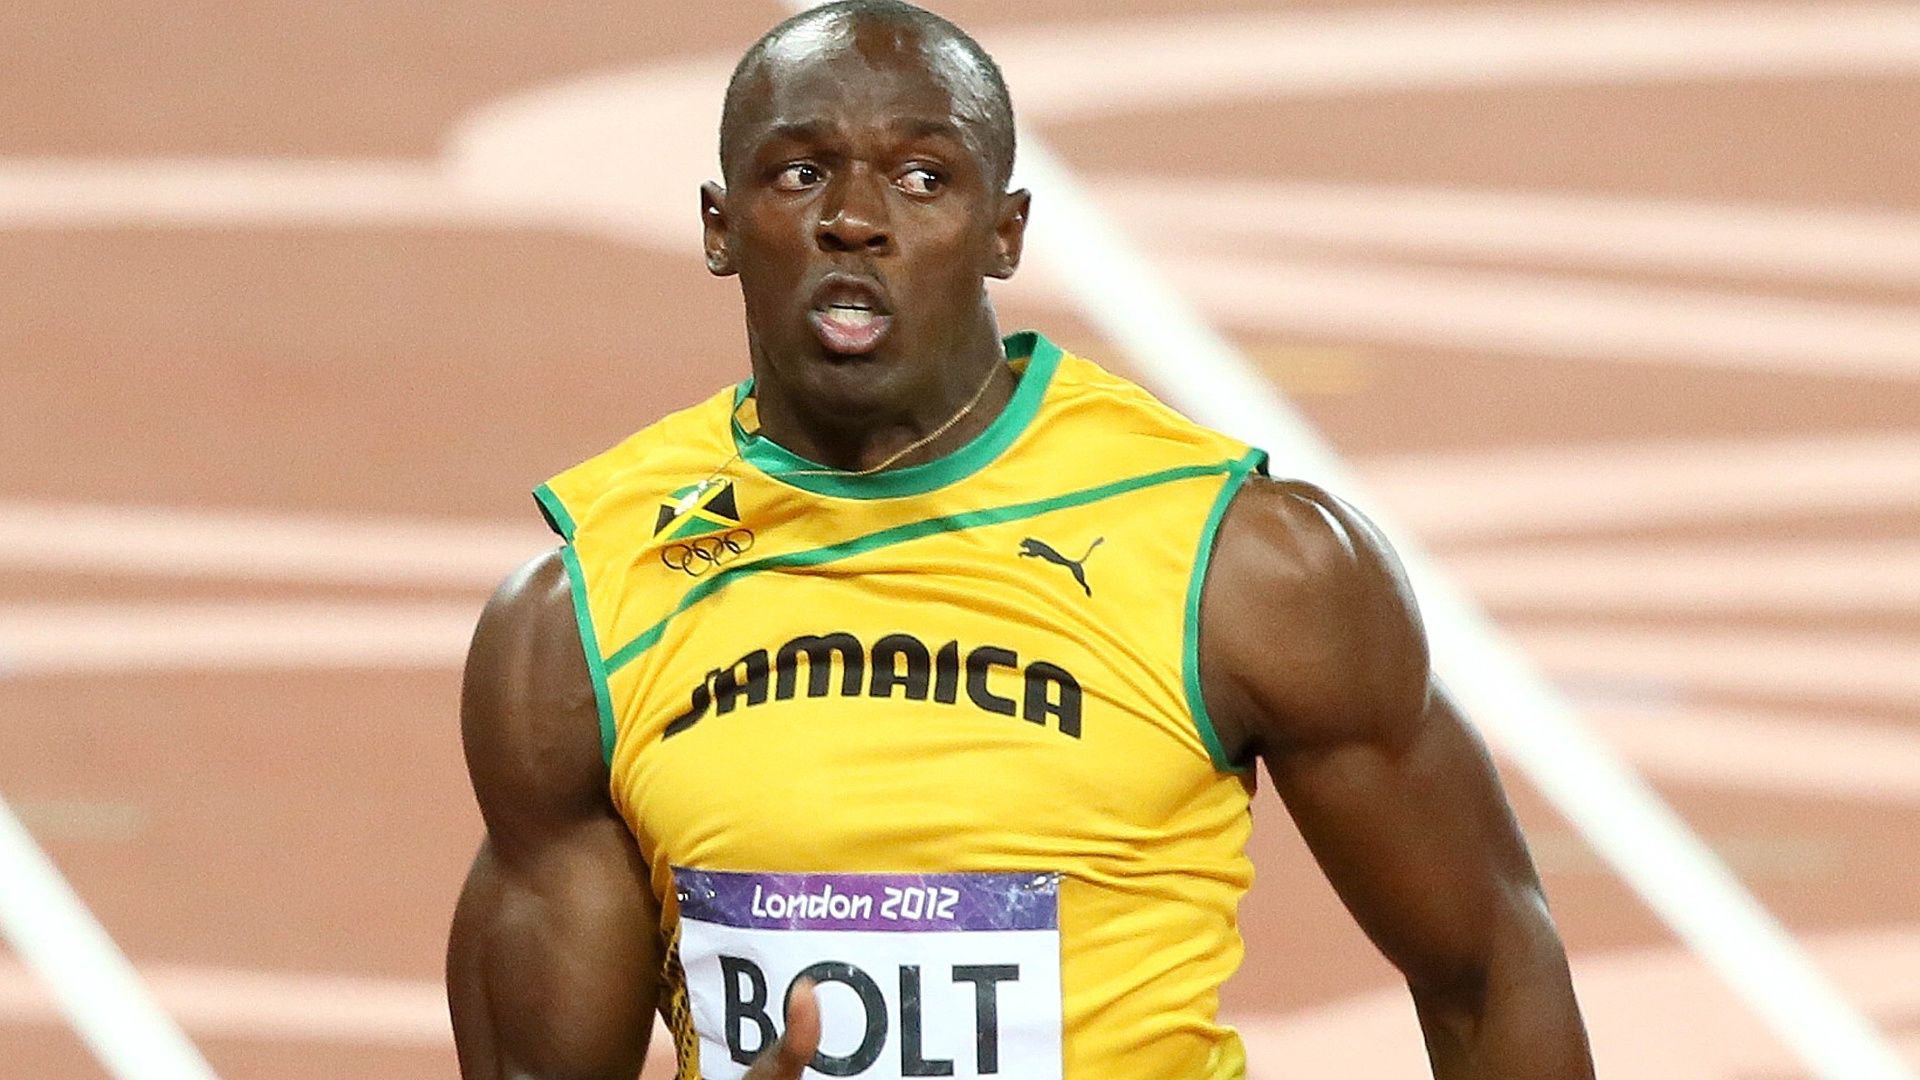 Biografía de Usain Bolt Juegos olímpicos de Londres 2012